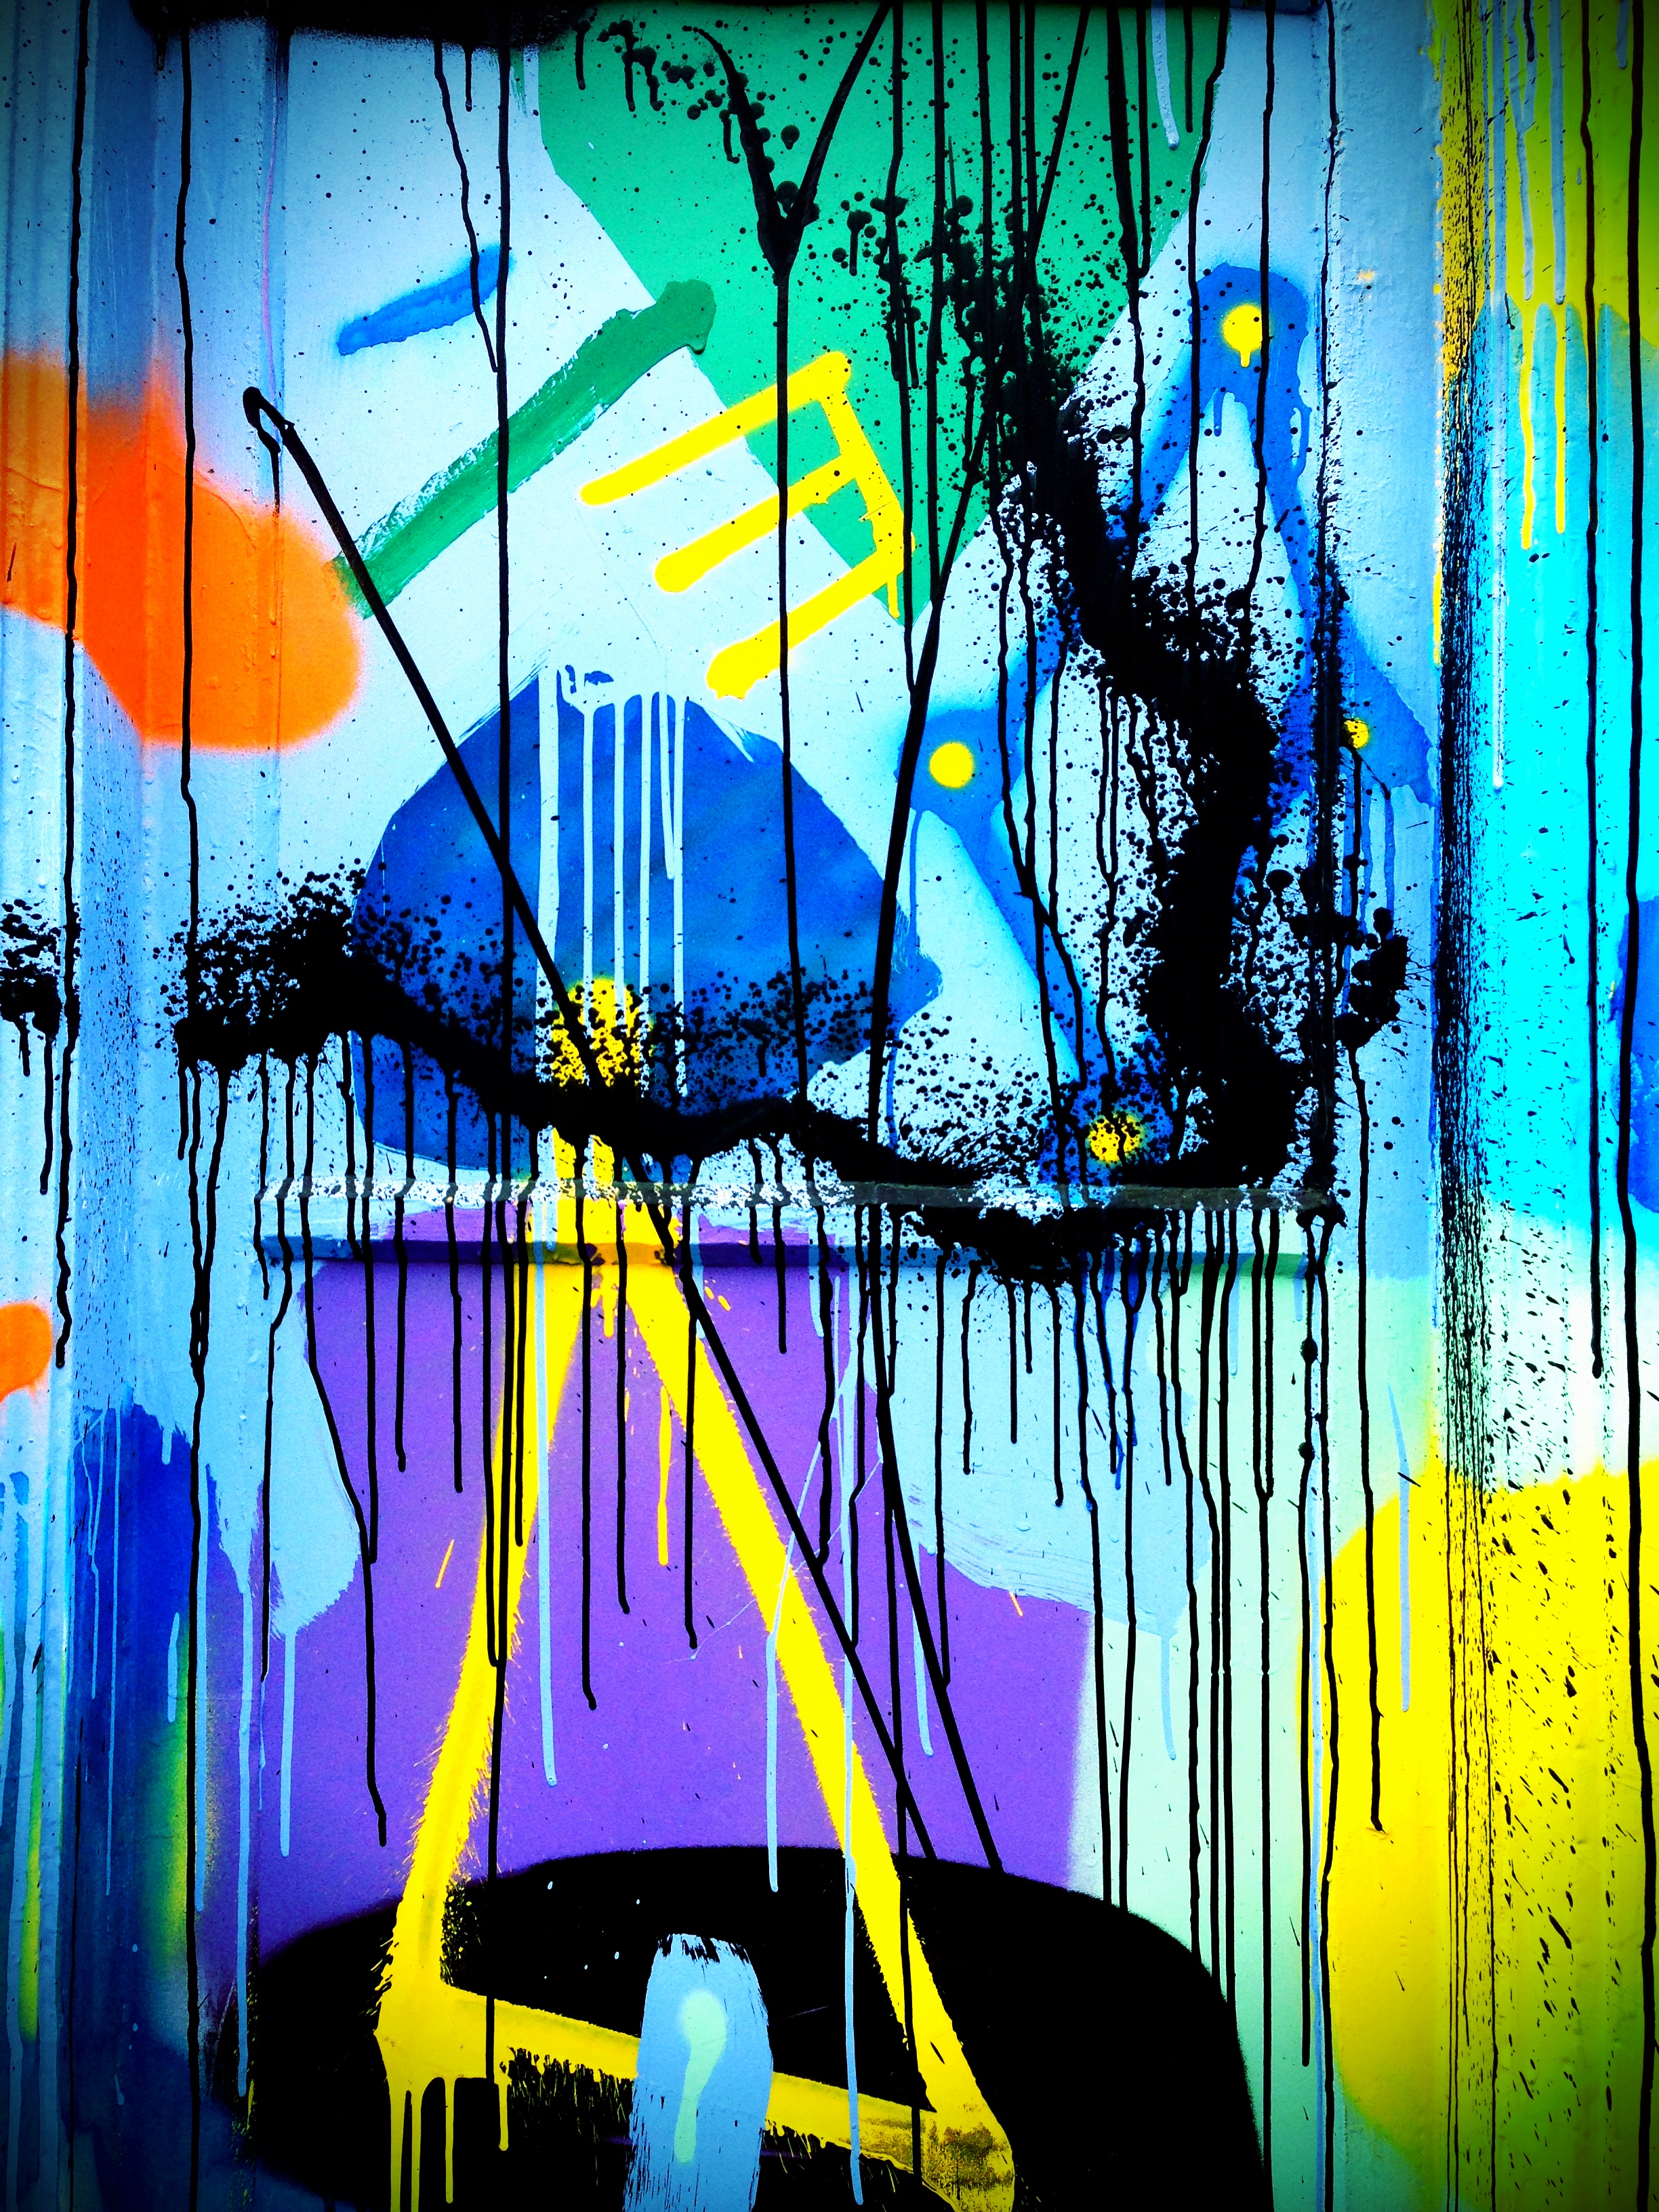 art, paint, surface, wall, graffiti, street art